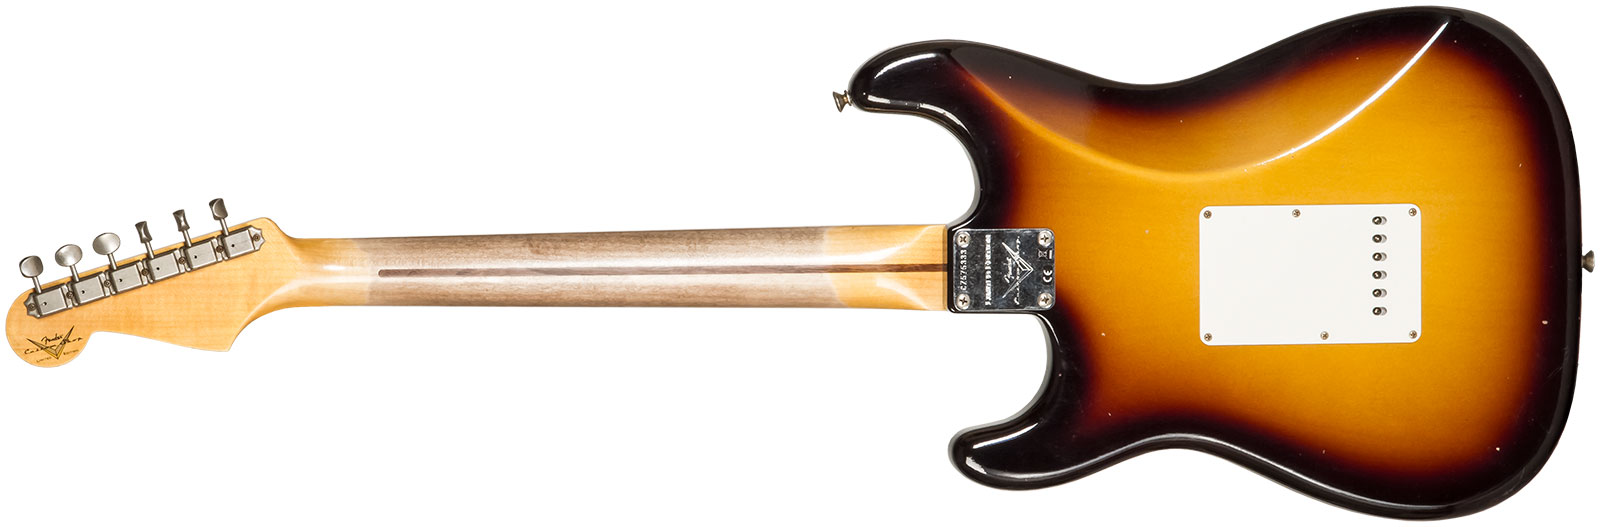 Fender Custom Shop Strat 1956 3s Trem Mn #cz575333 - Journeyman Relic 2-color Sunburst - Elektrische gitaar in Str-vorm - Variation 1